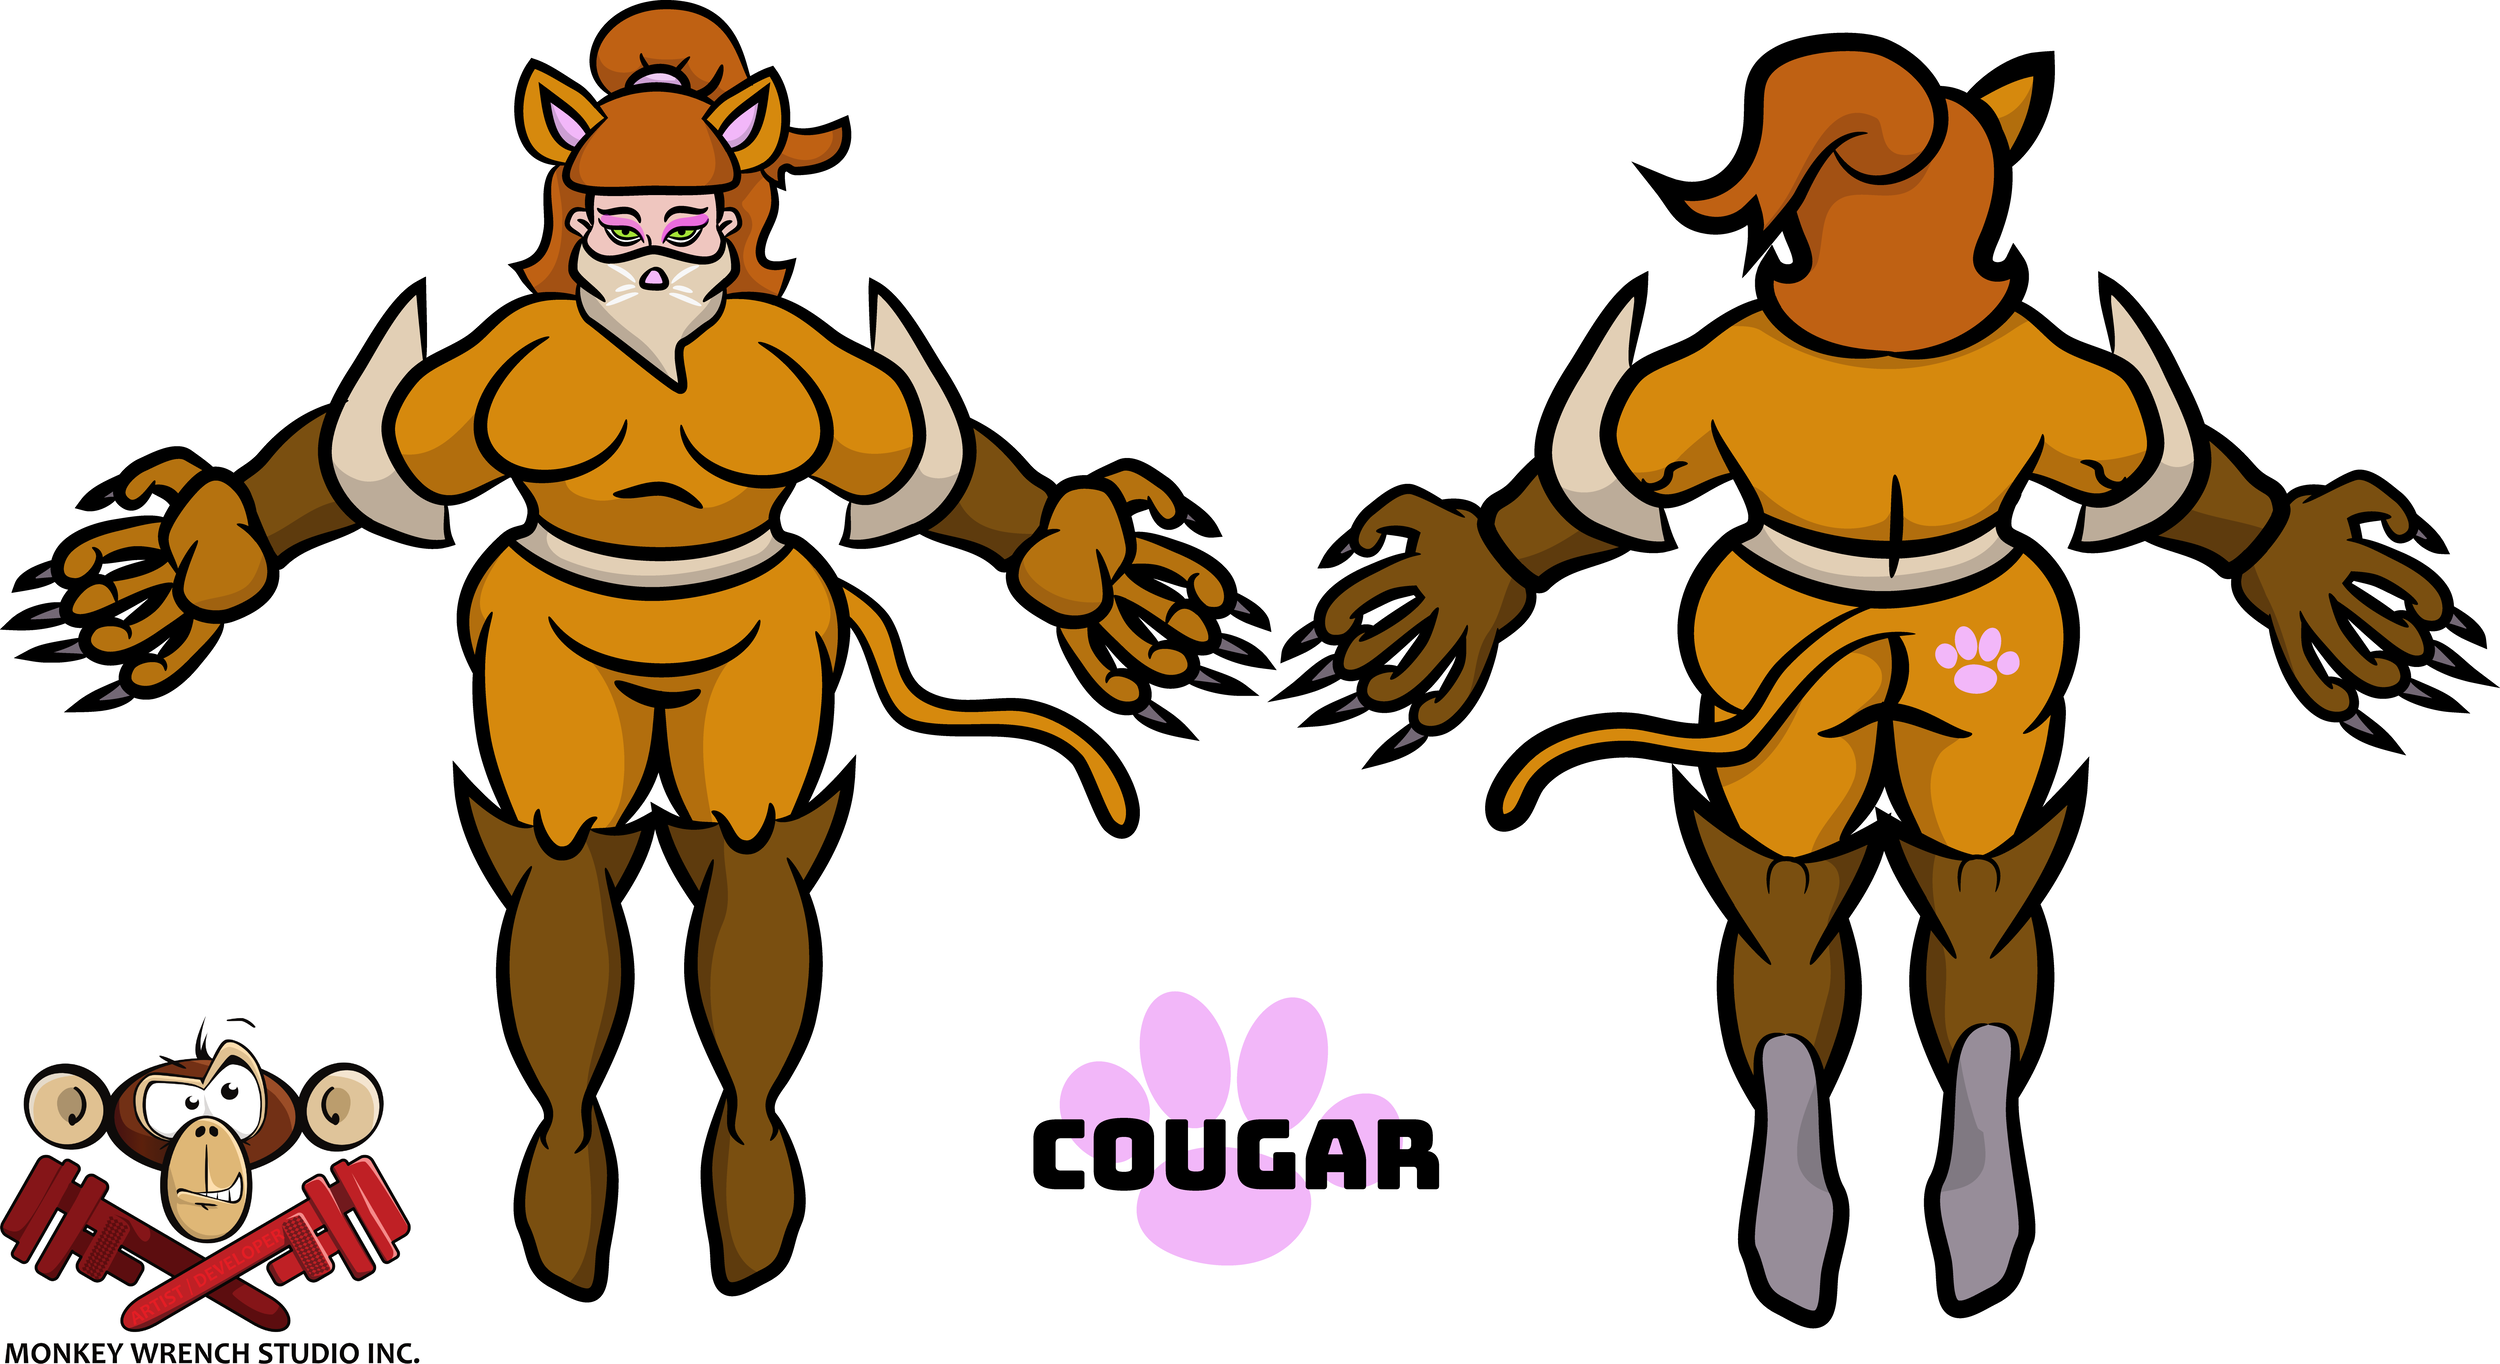 cougar_color1.png